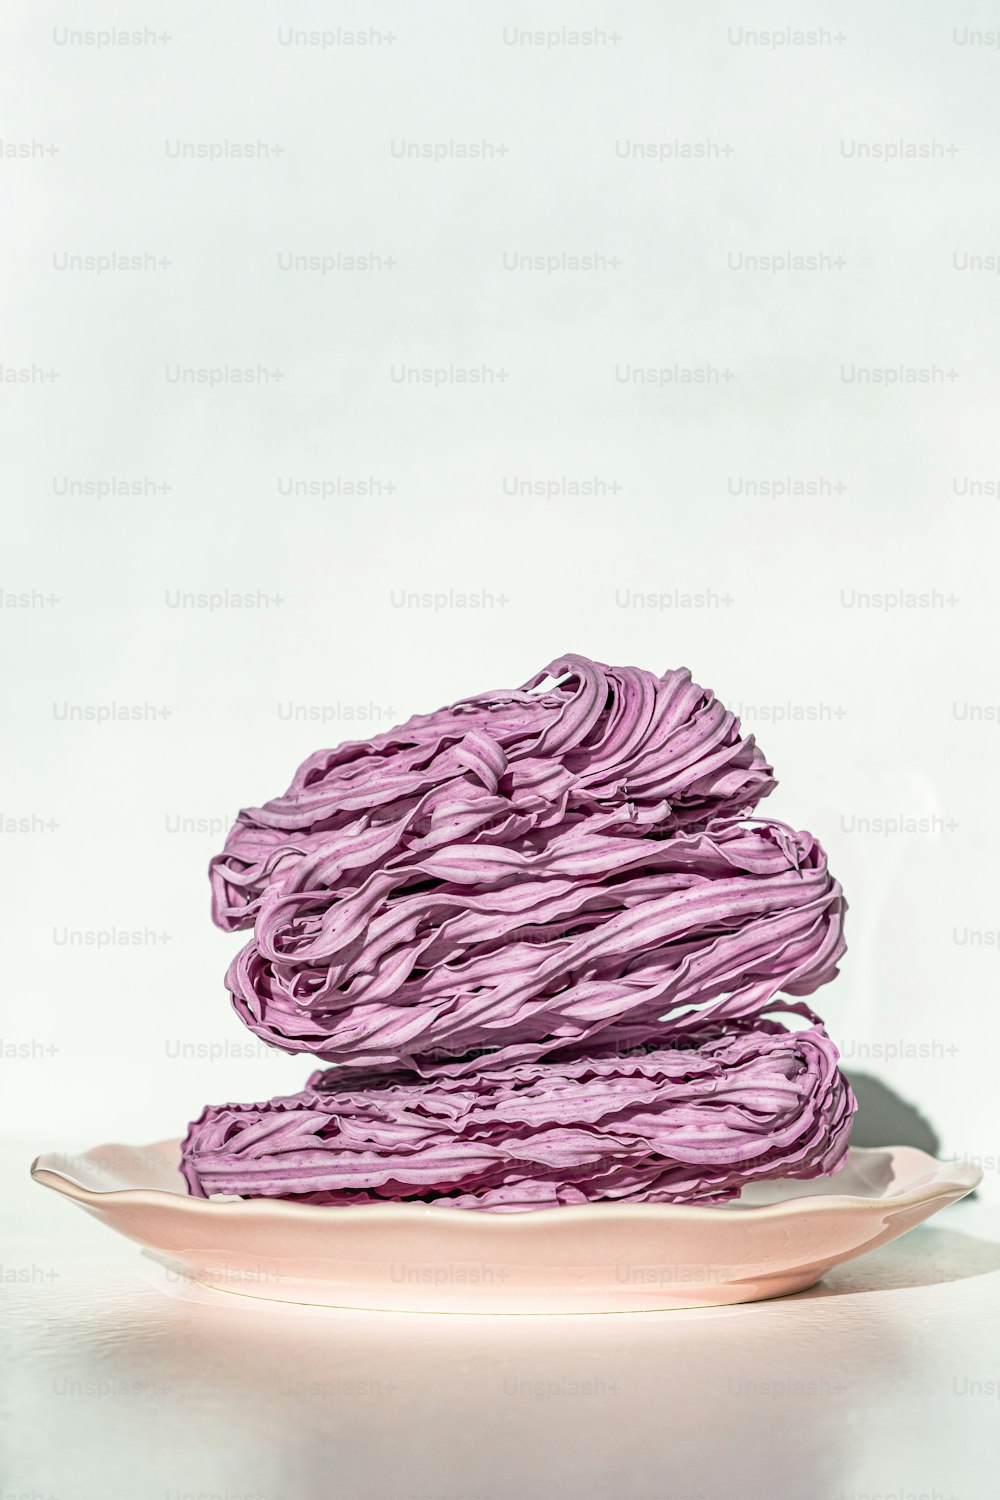 un plato con una pila de telas púrpuras en él